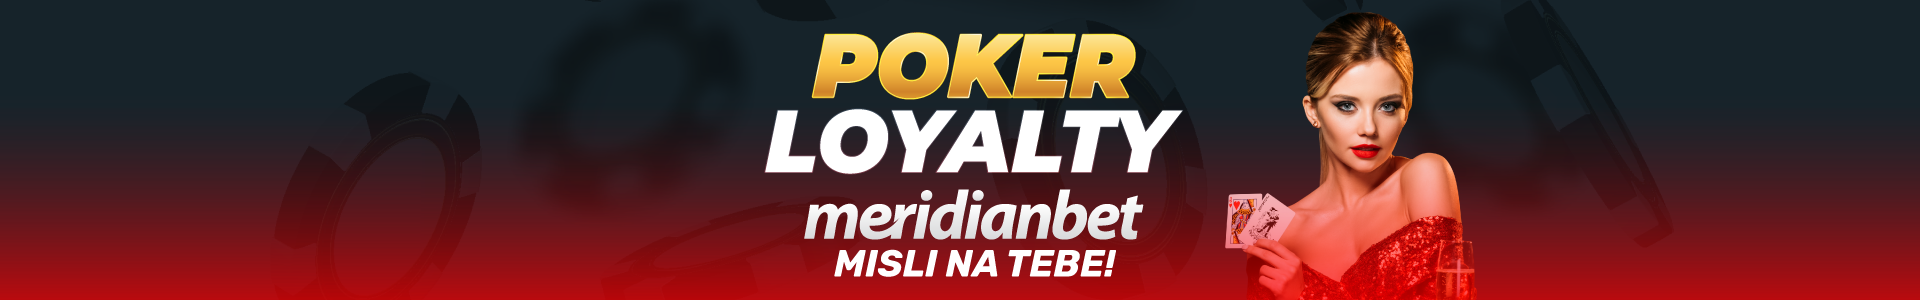 Poker Loyalty